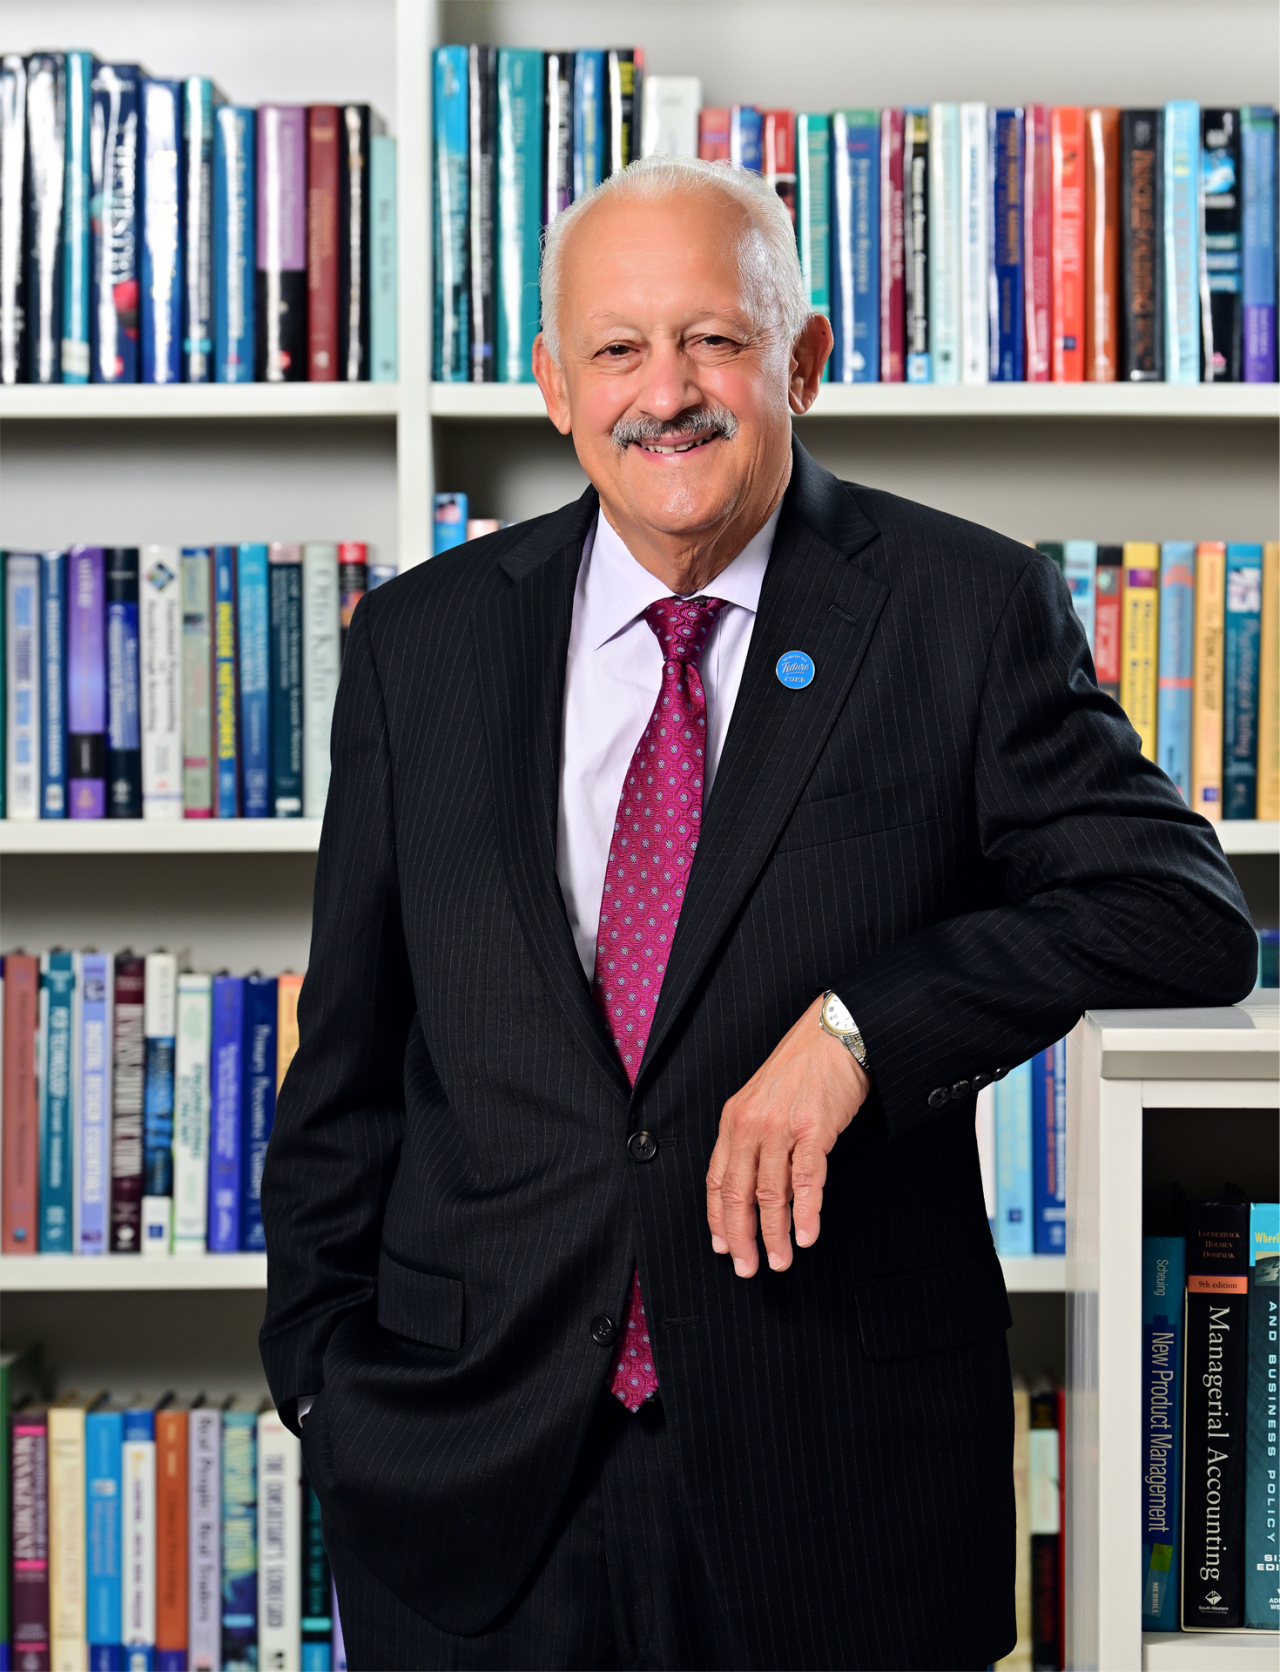 Tomás Morales, the President of California State University, San Bernardino